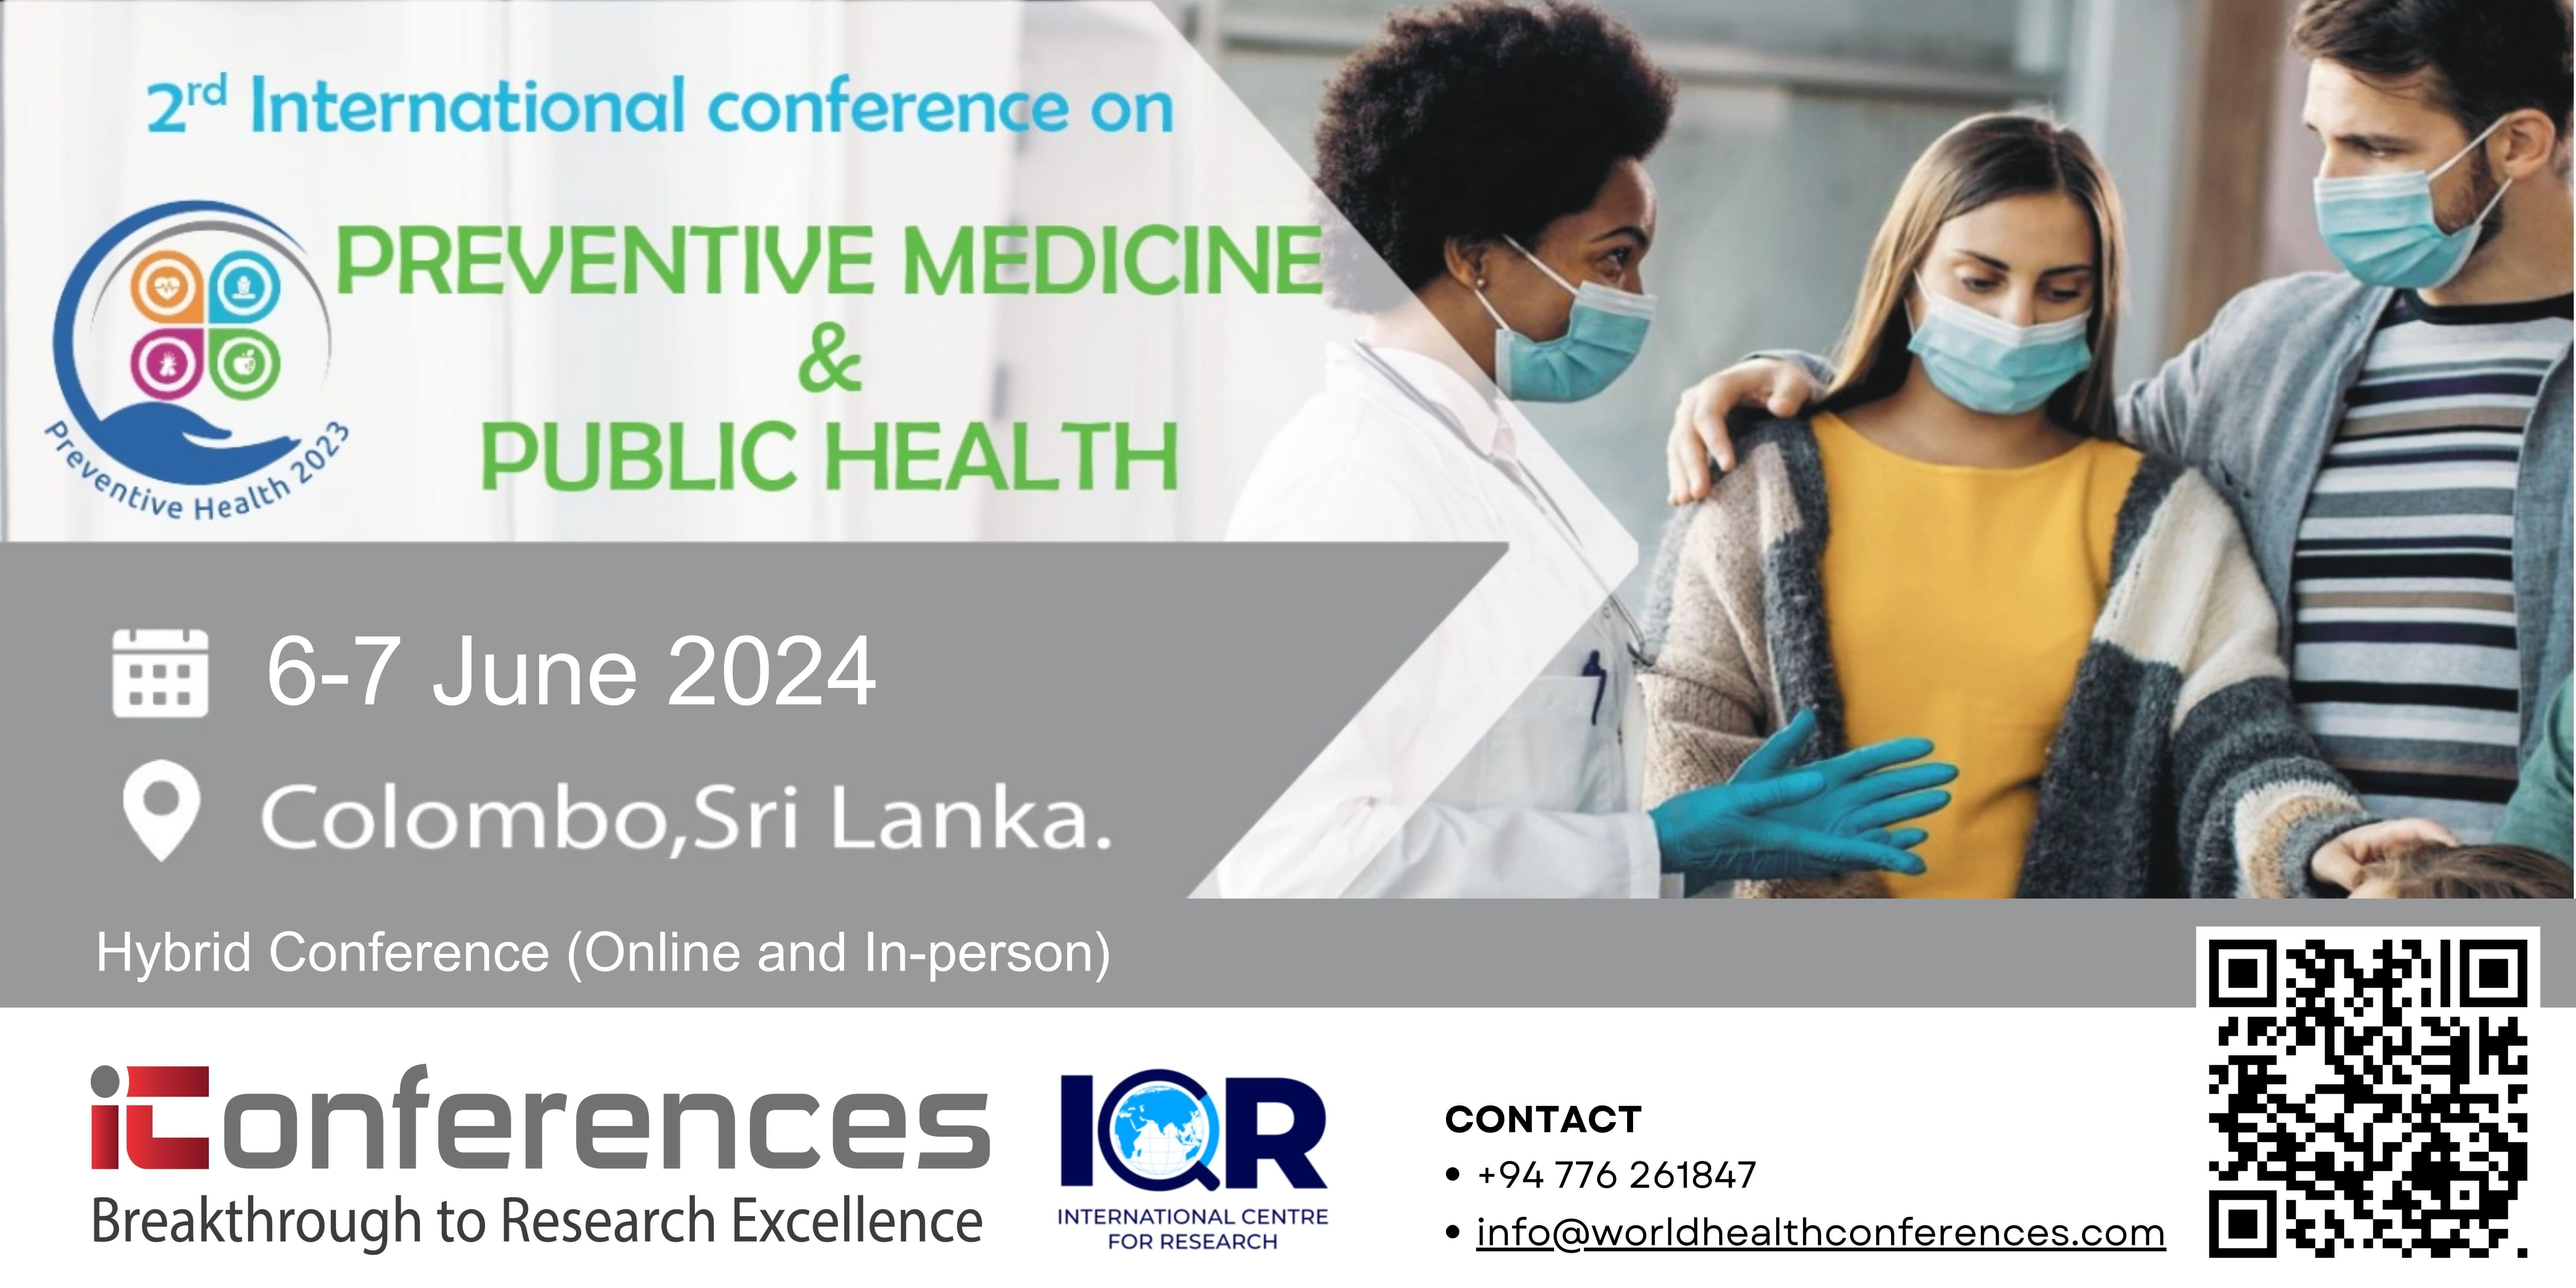 2nd International Conference on Preventive Medicine and Public Health 2024, Colombo, Sri Lanka